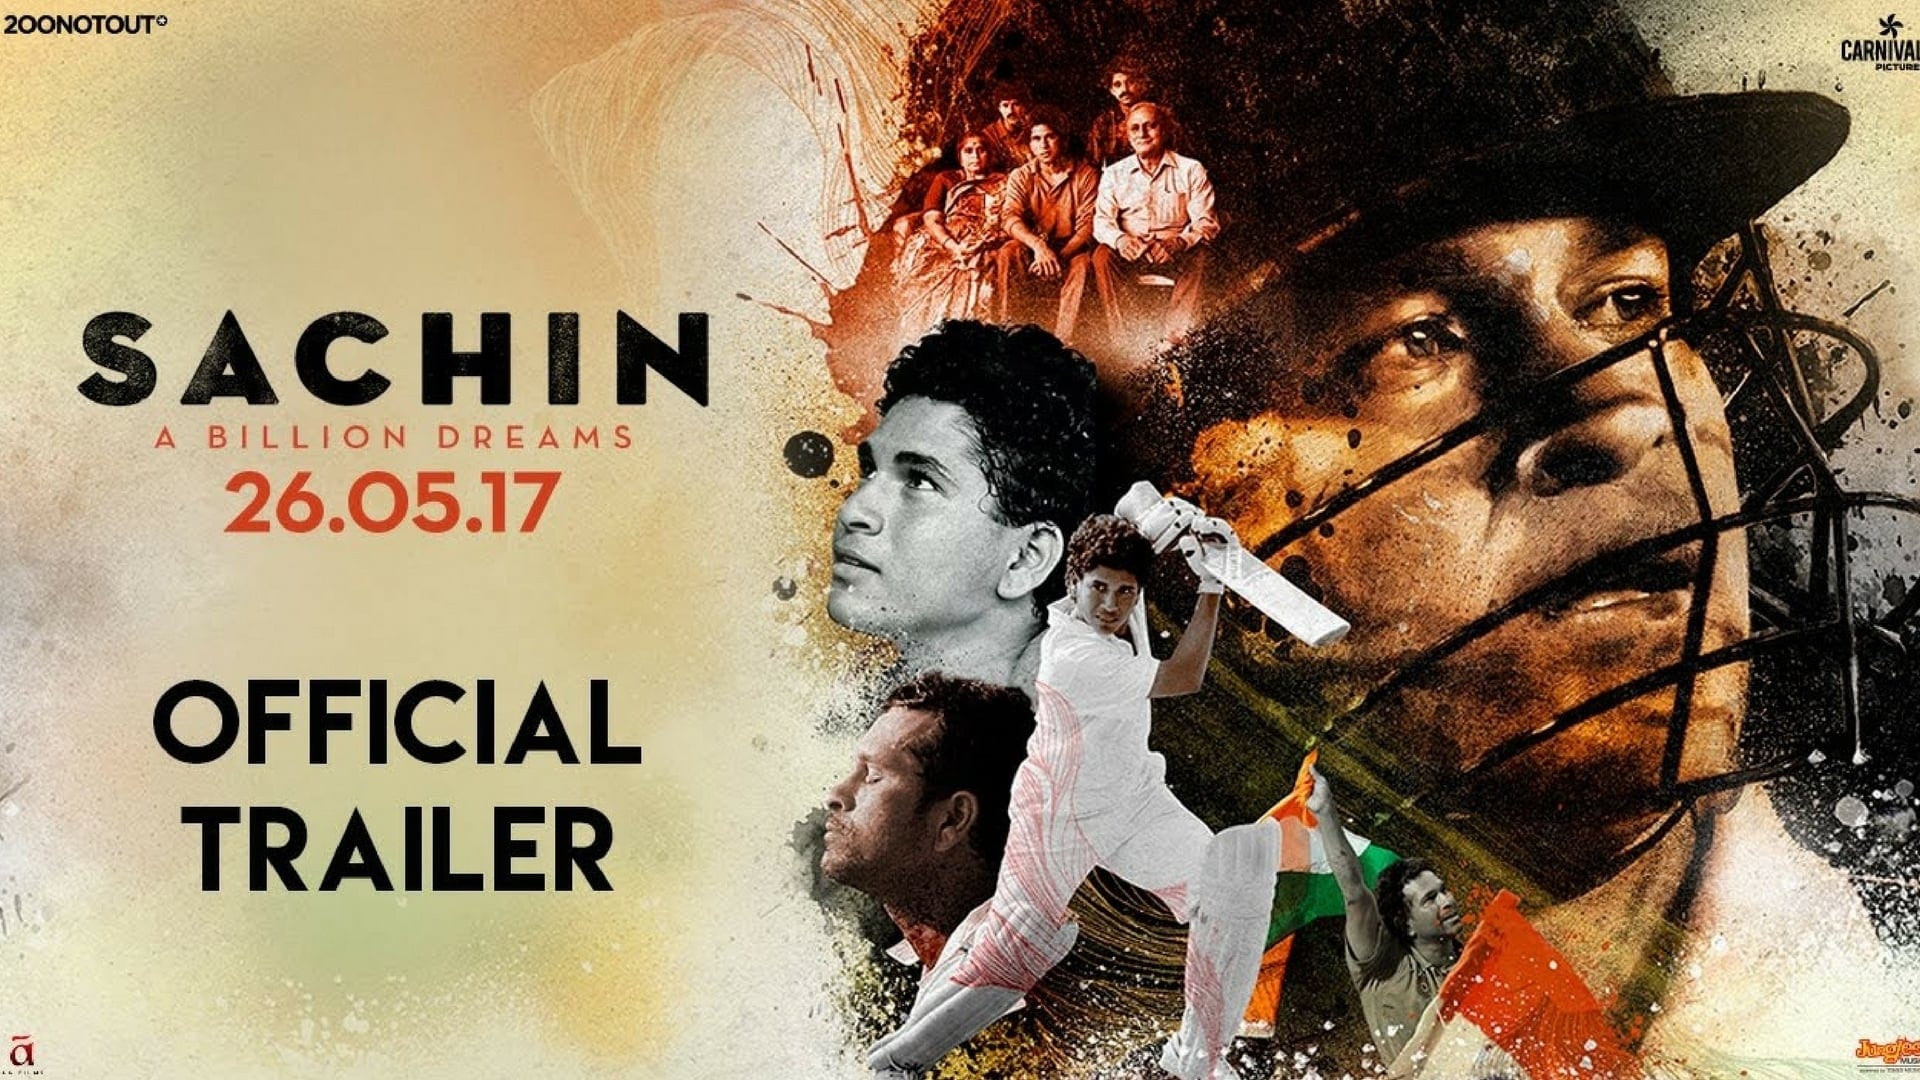 Watch Sachin A Billion Dreams Full Movie Online For Free In HD